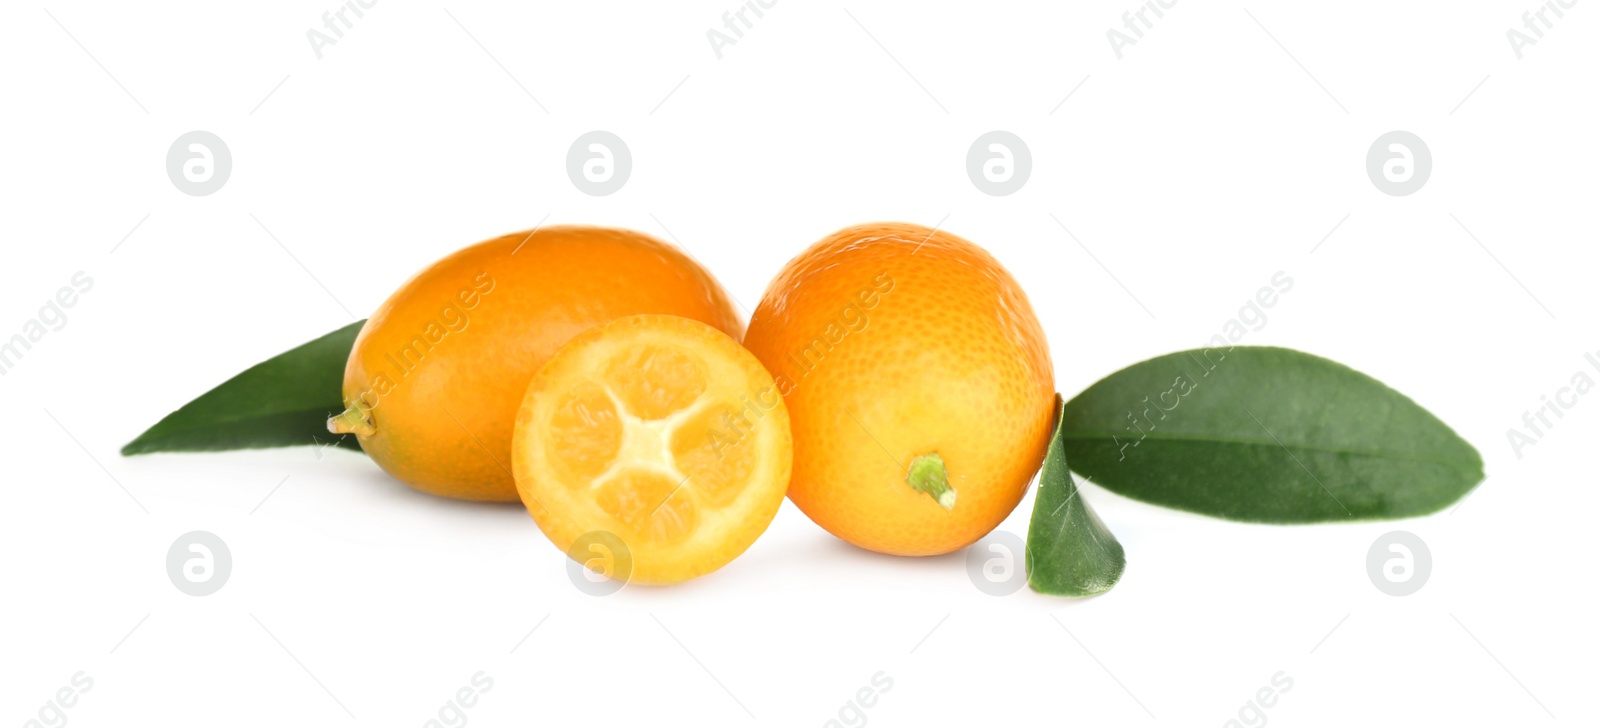 Photo of Whole and cut ripe kumquats with leaves on white background. Exotic fruit